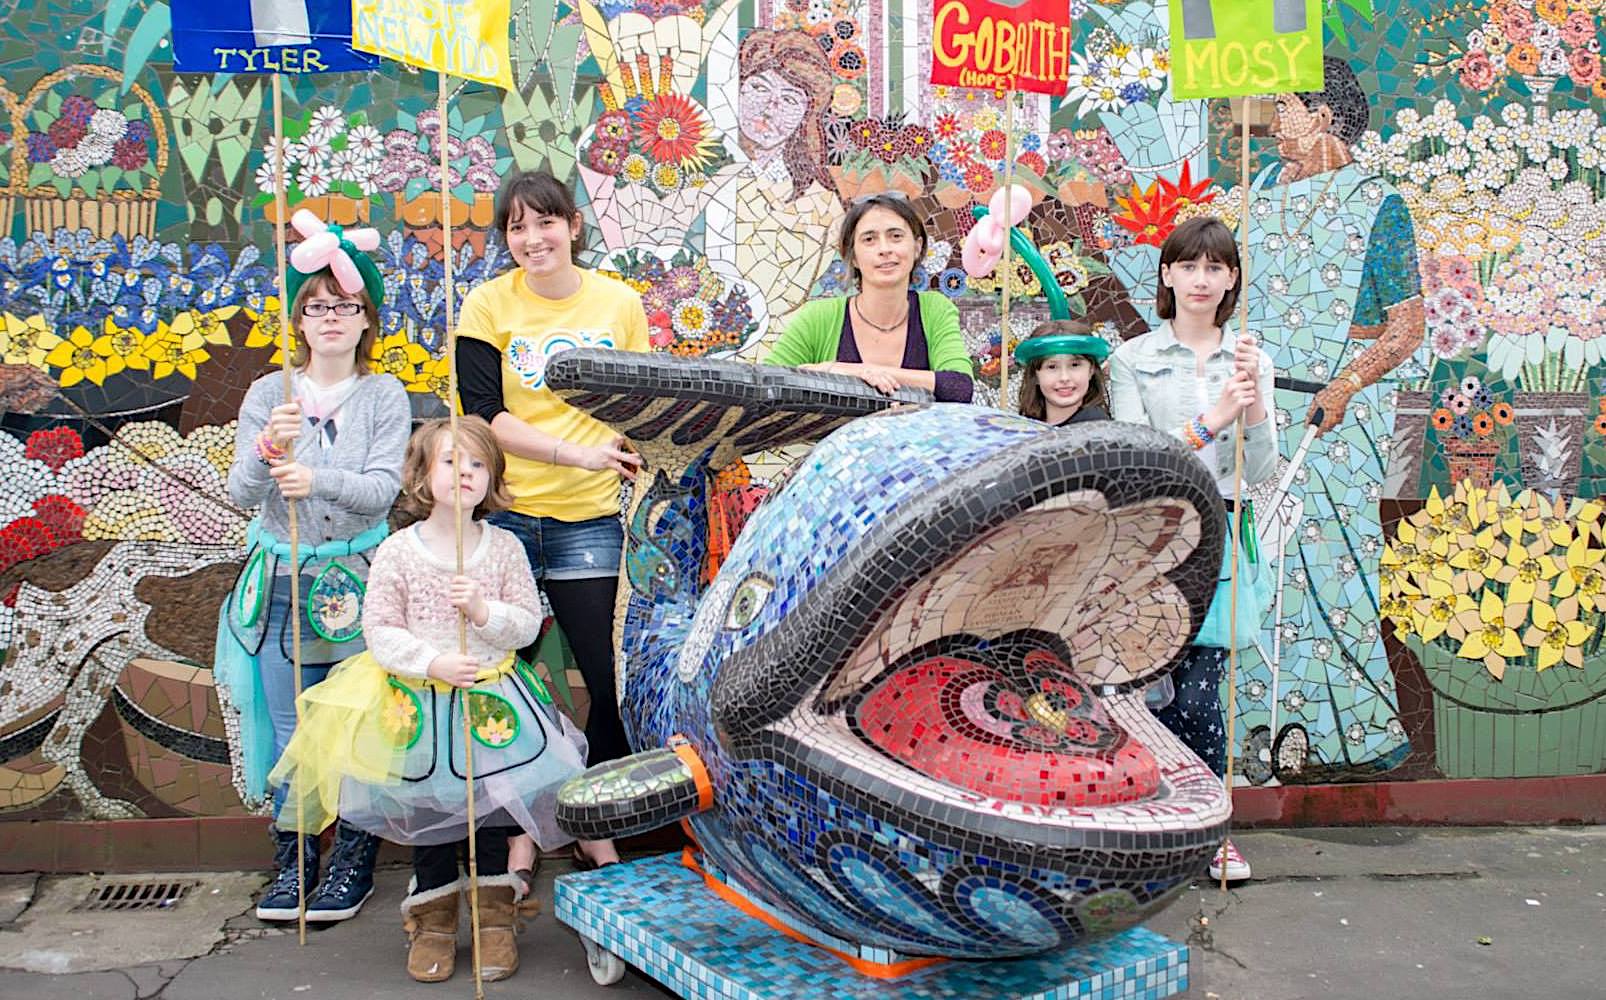 community mosaic whale and mosaic dresses